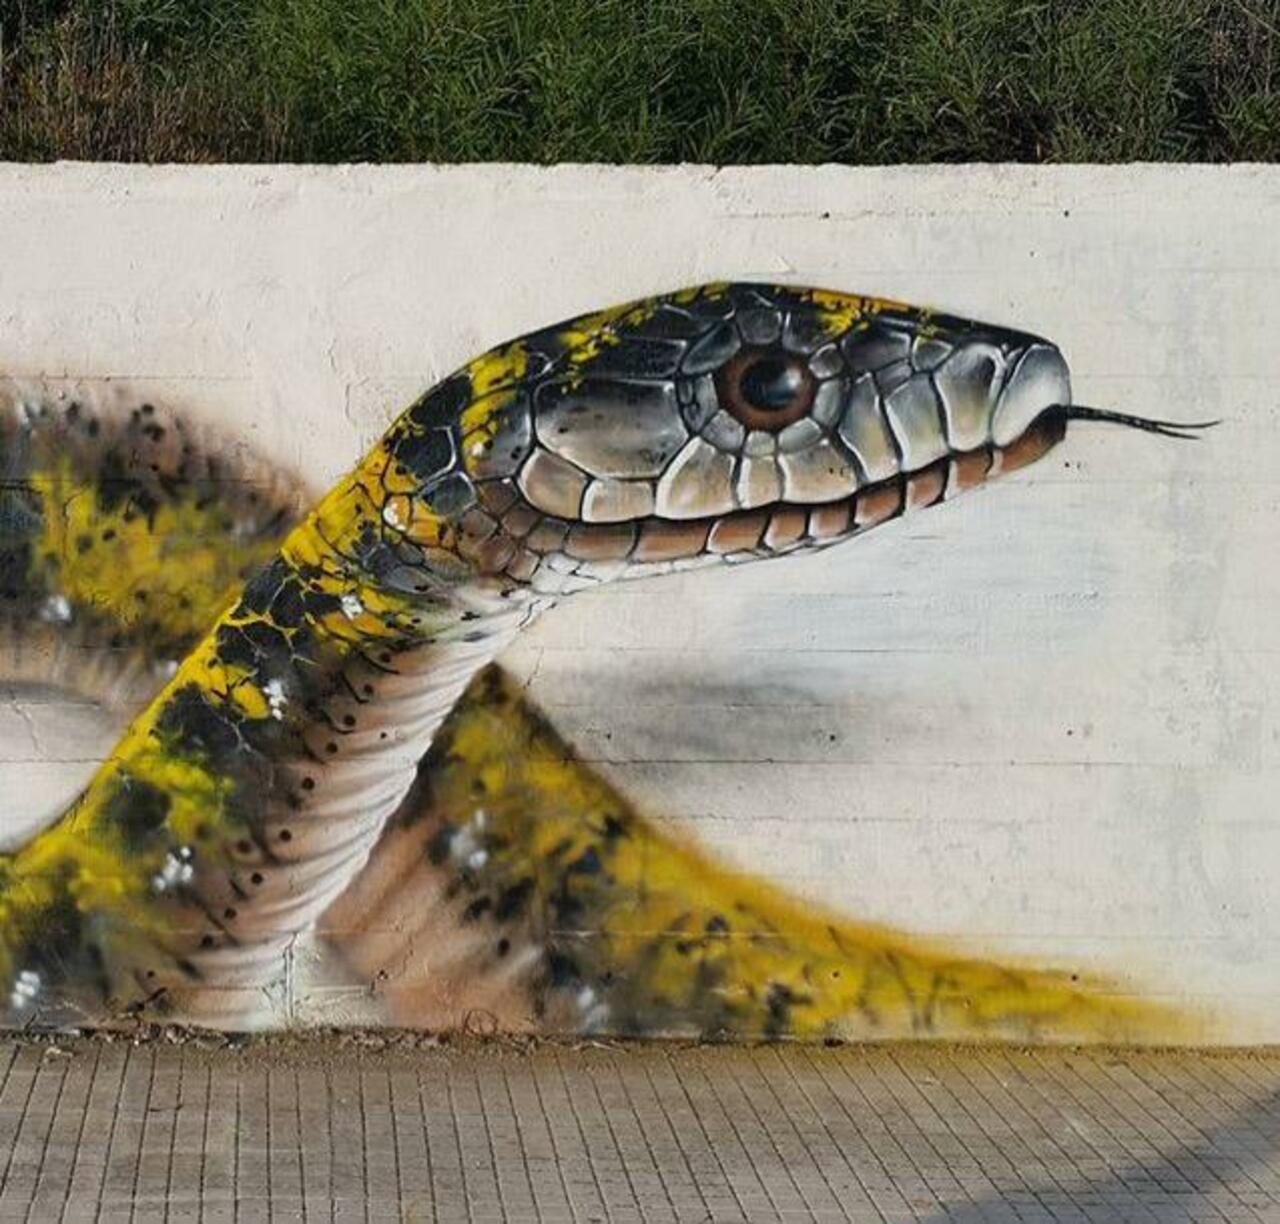 Street Art by Cosimocheone 

#art #graffiti #mural #streetart http://t.co/CgnQNqqmxy